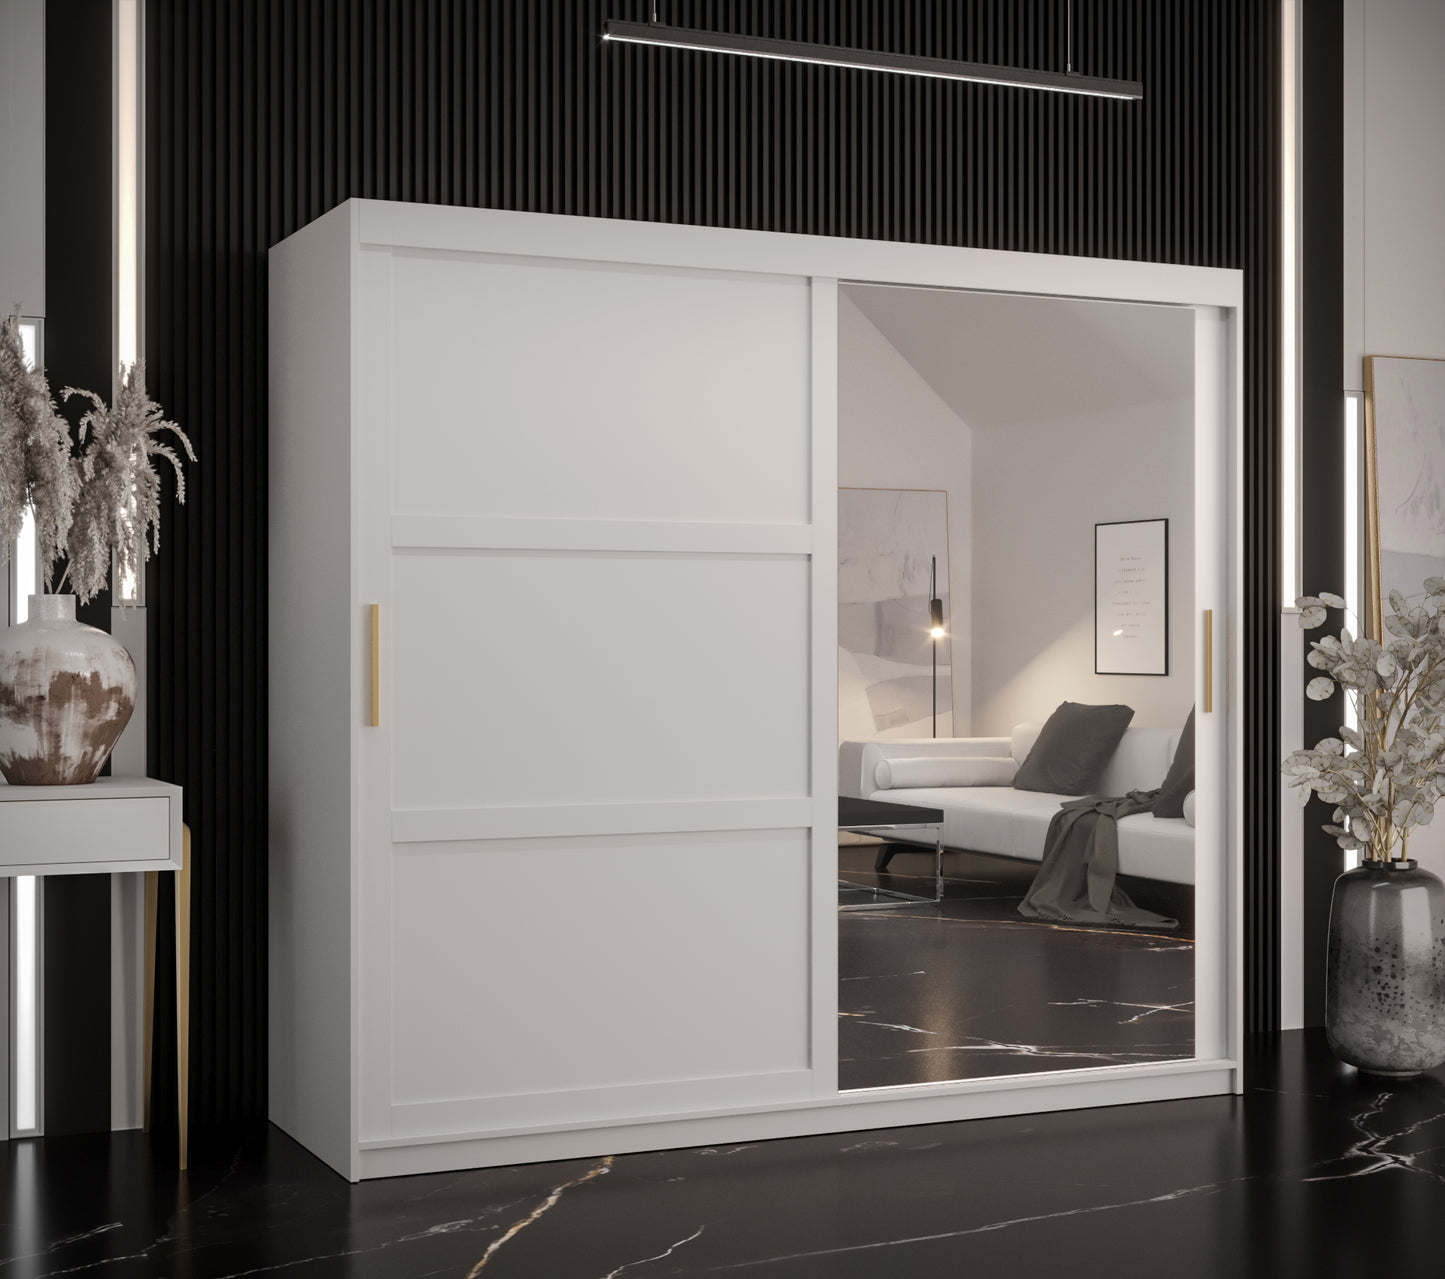 RAMIRA 2 - Wardrobe Sliding Door with Mirror in Black or White Combinations, Shelves, Rails, Drawer optional >200cm<